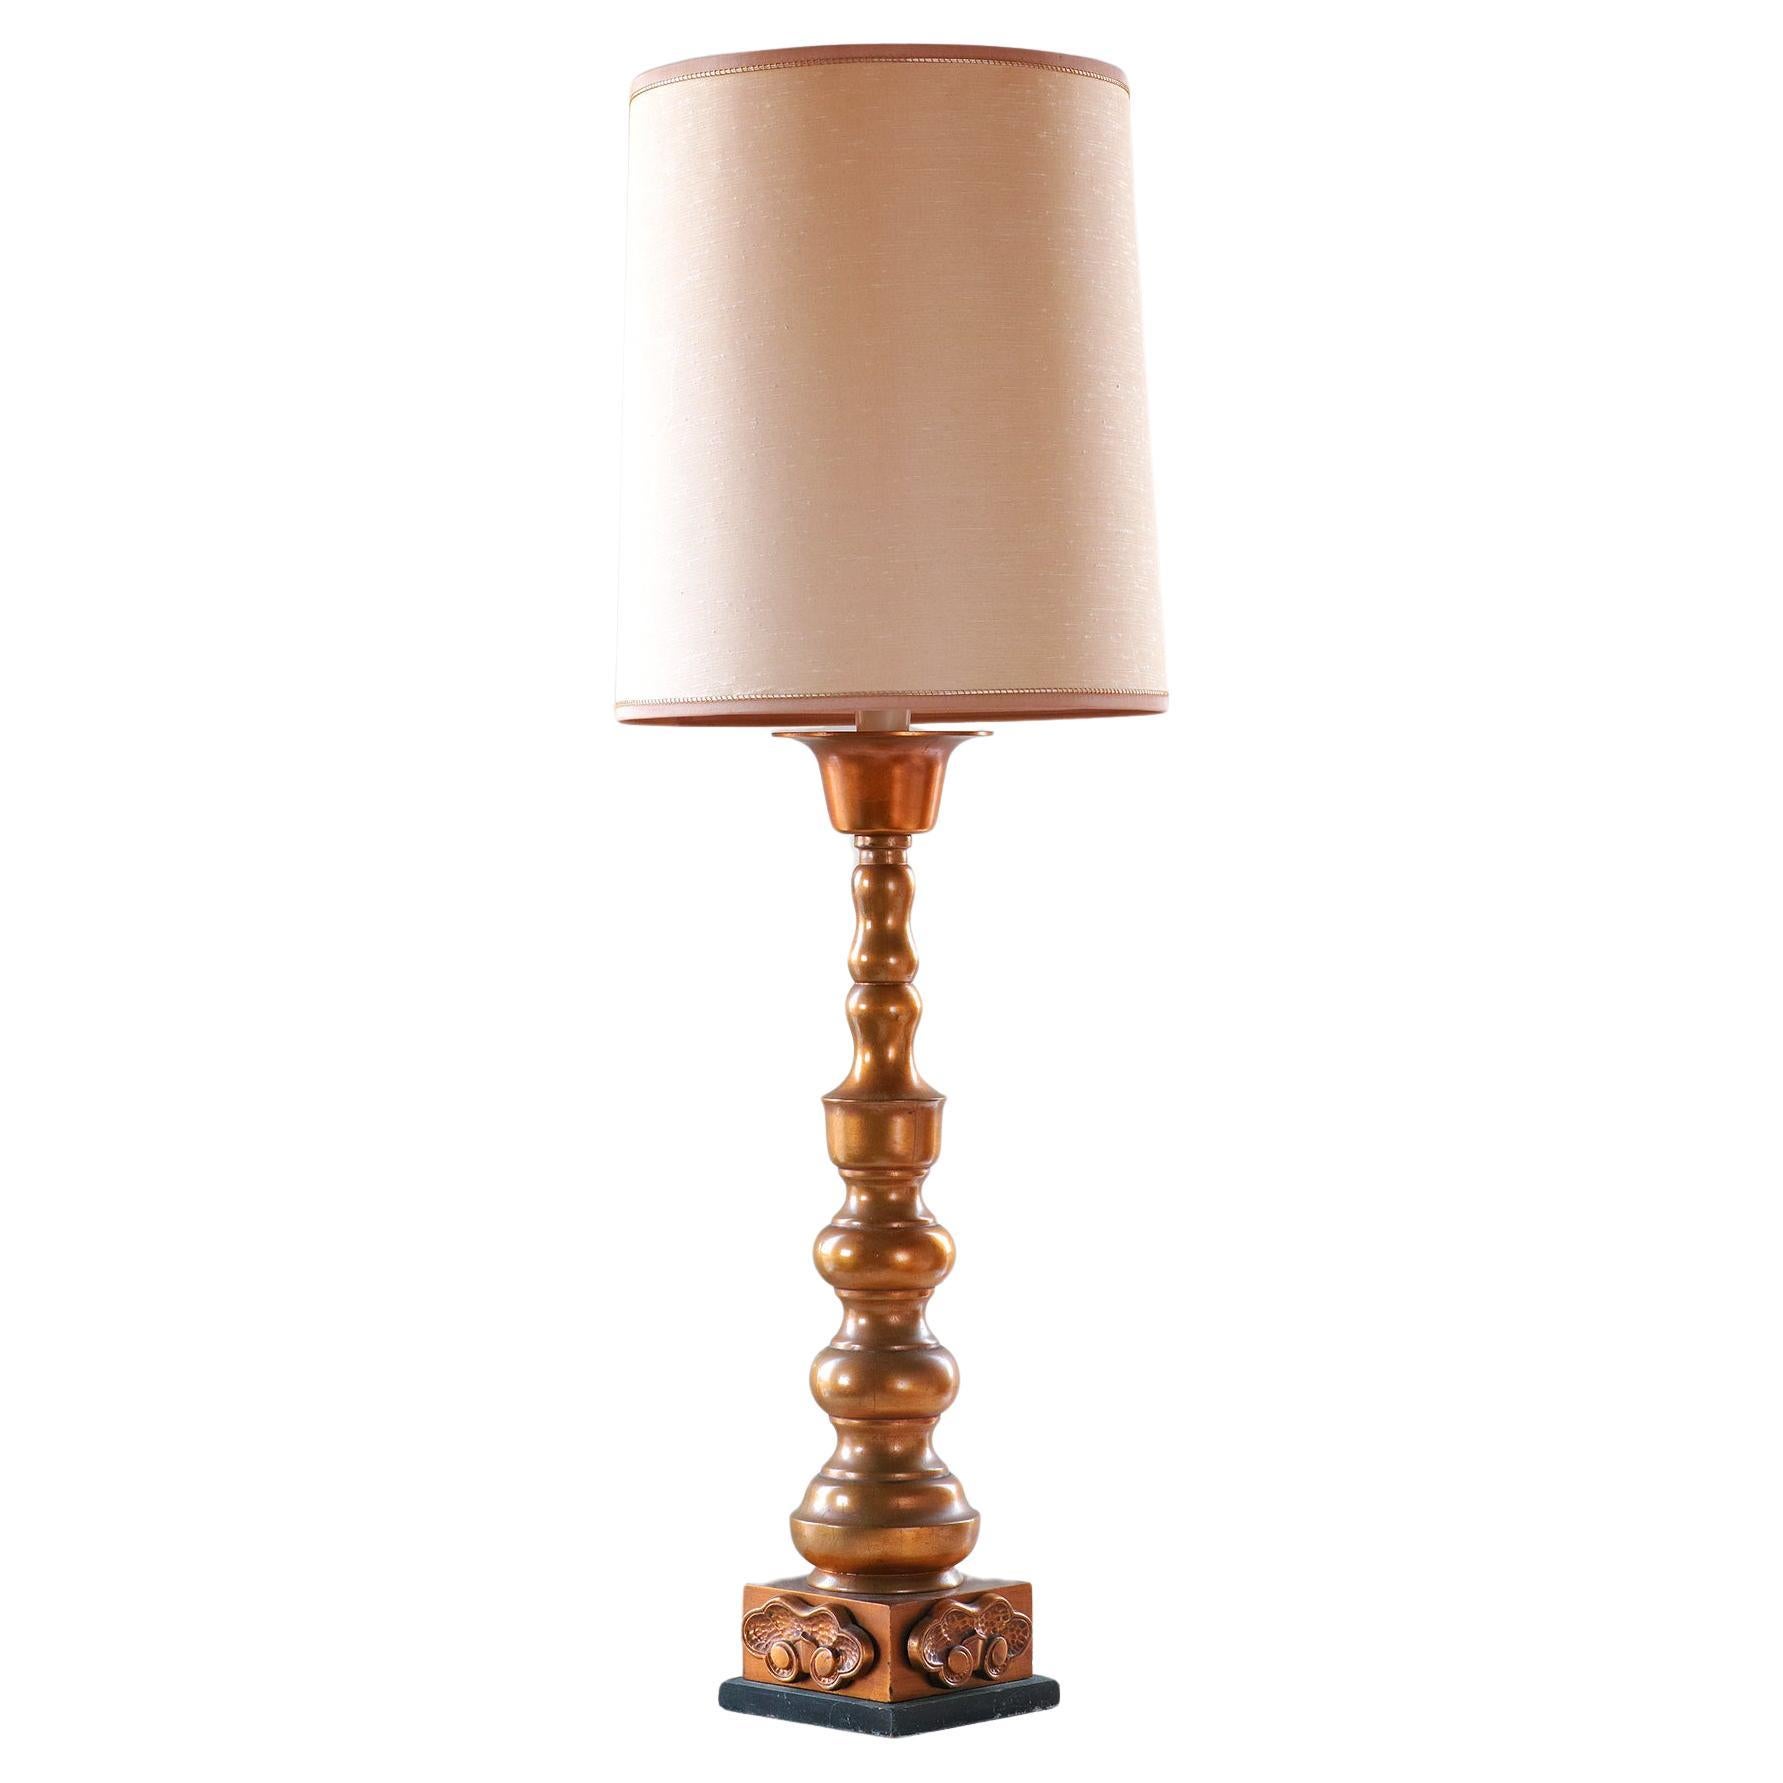 Vergoldete Chinoiserie-Baluster-Tischlampe aus Marbro